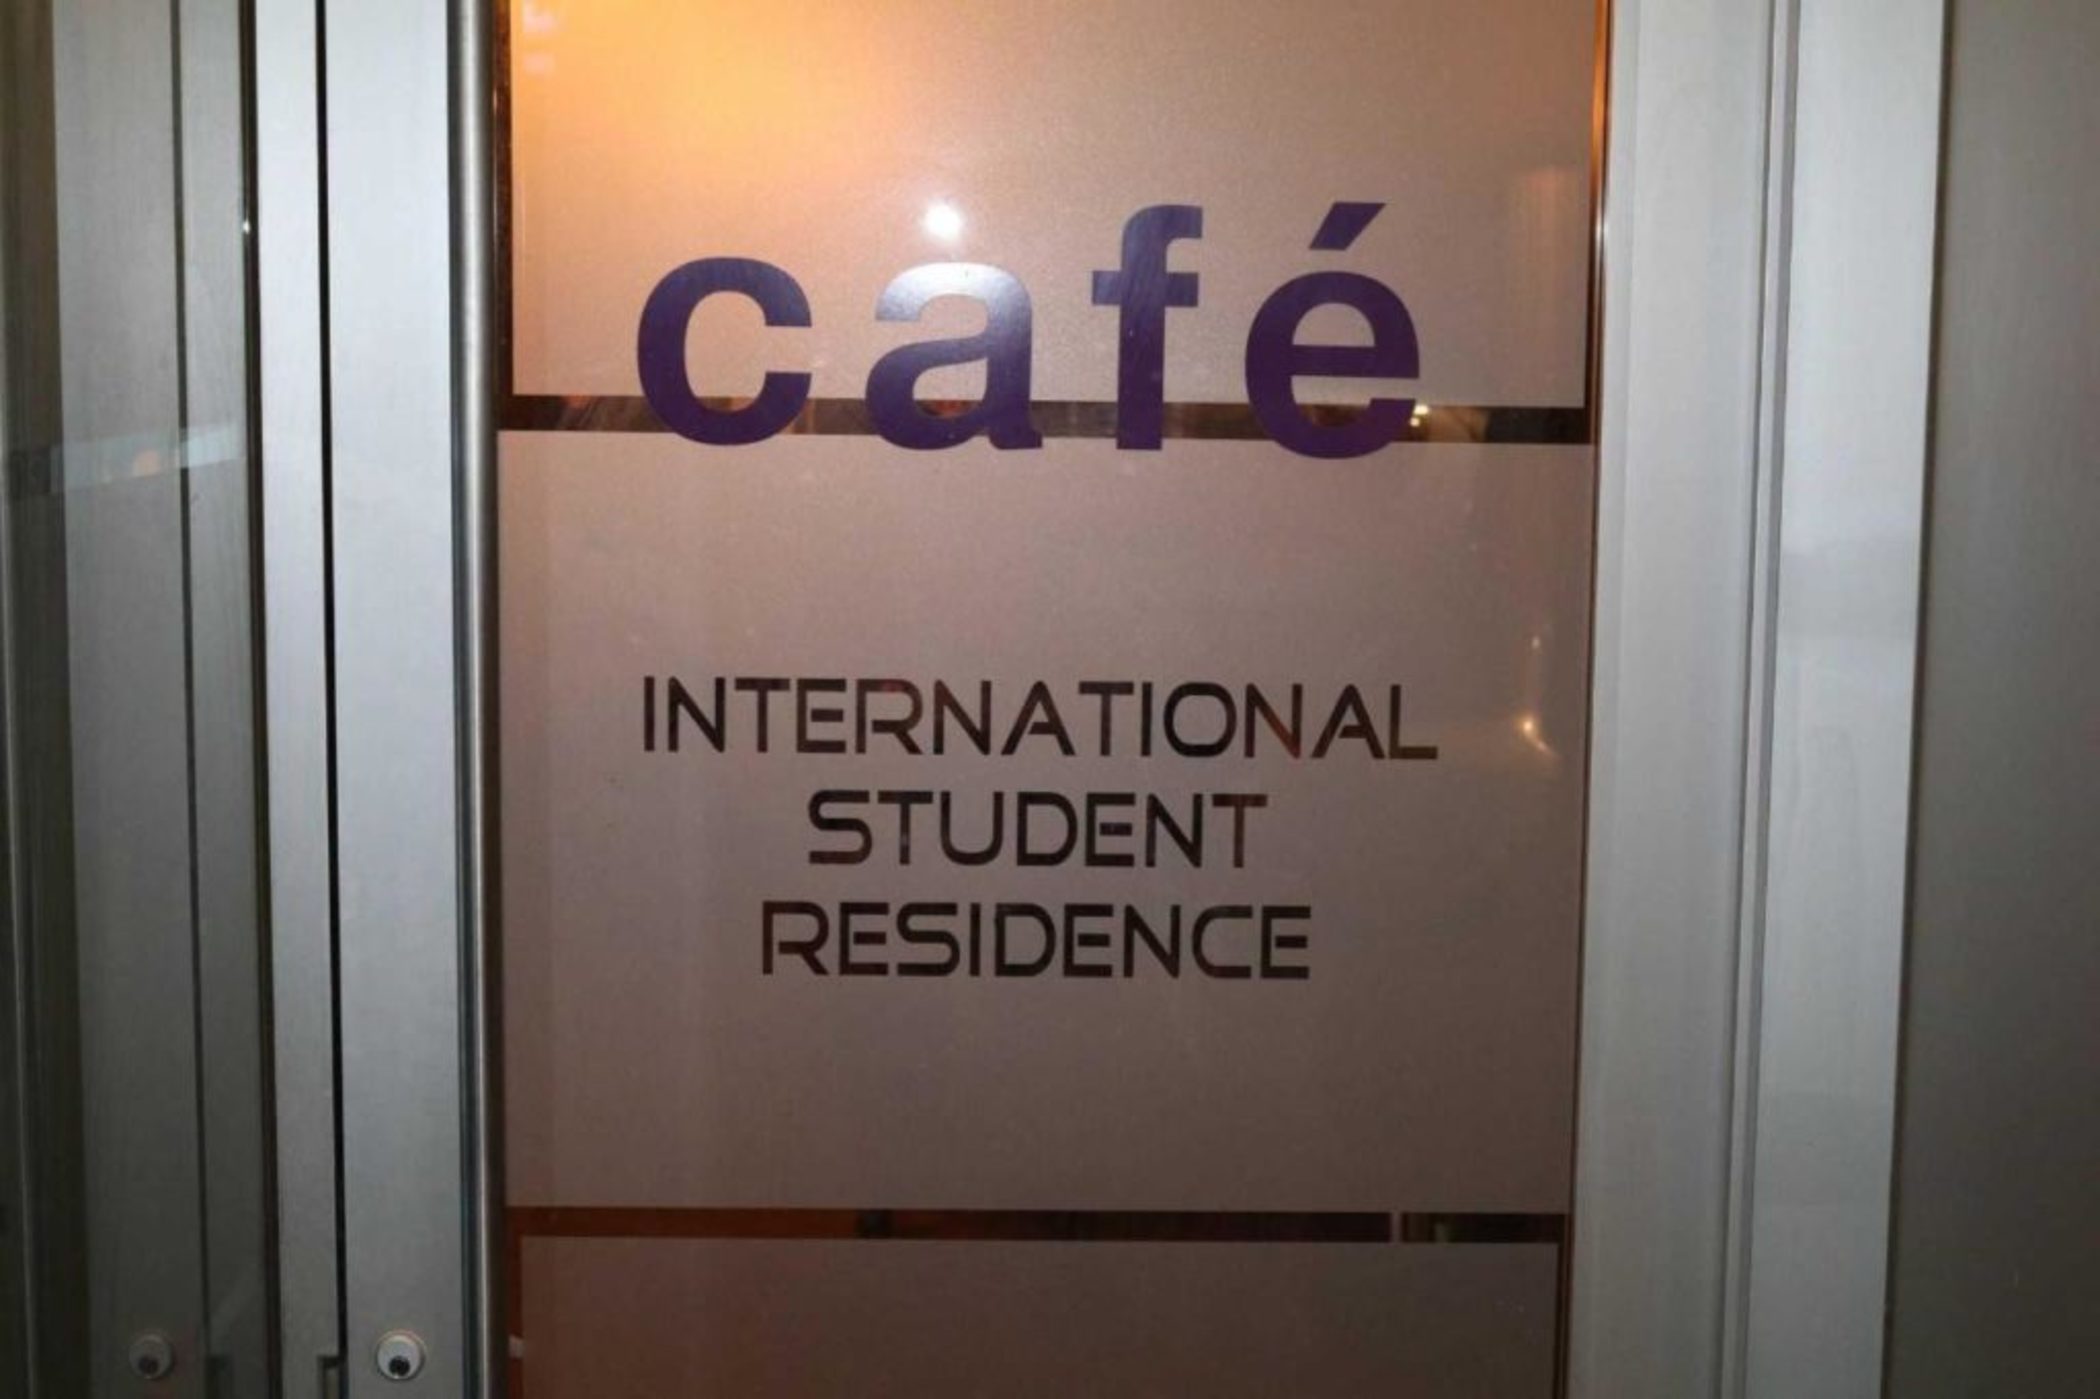 International Student Residence